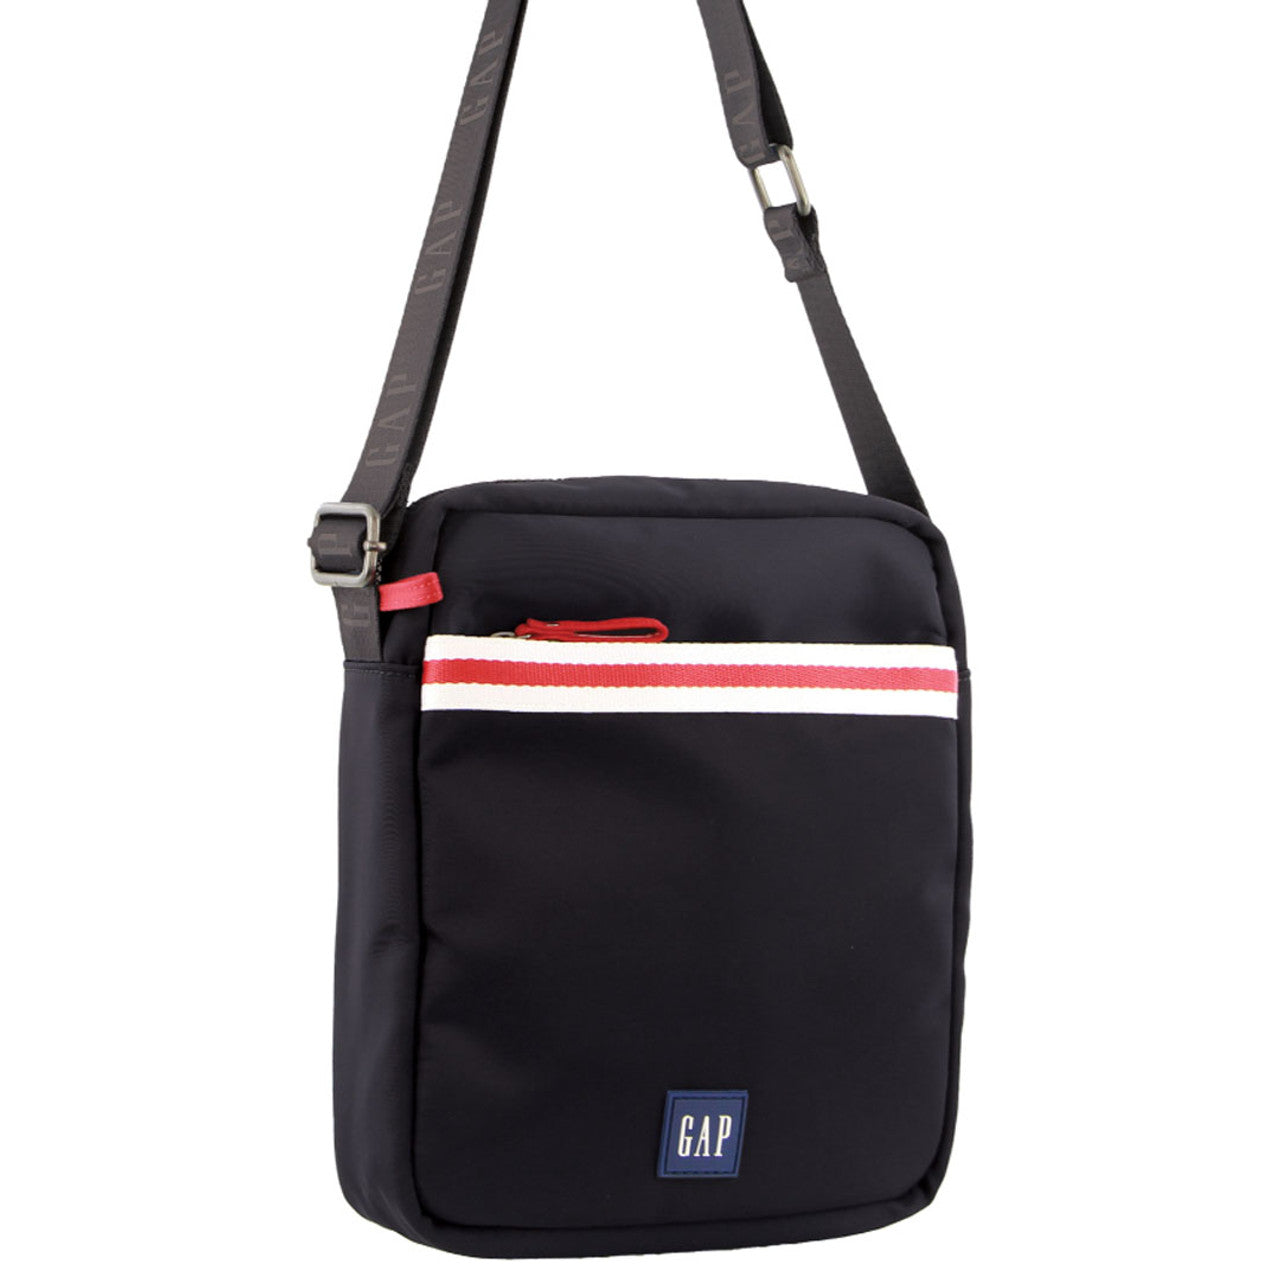 GAP - 27 Unisex nylon shoulder bag - Black